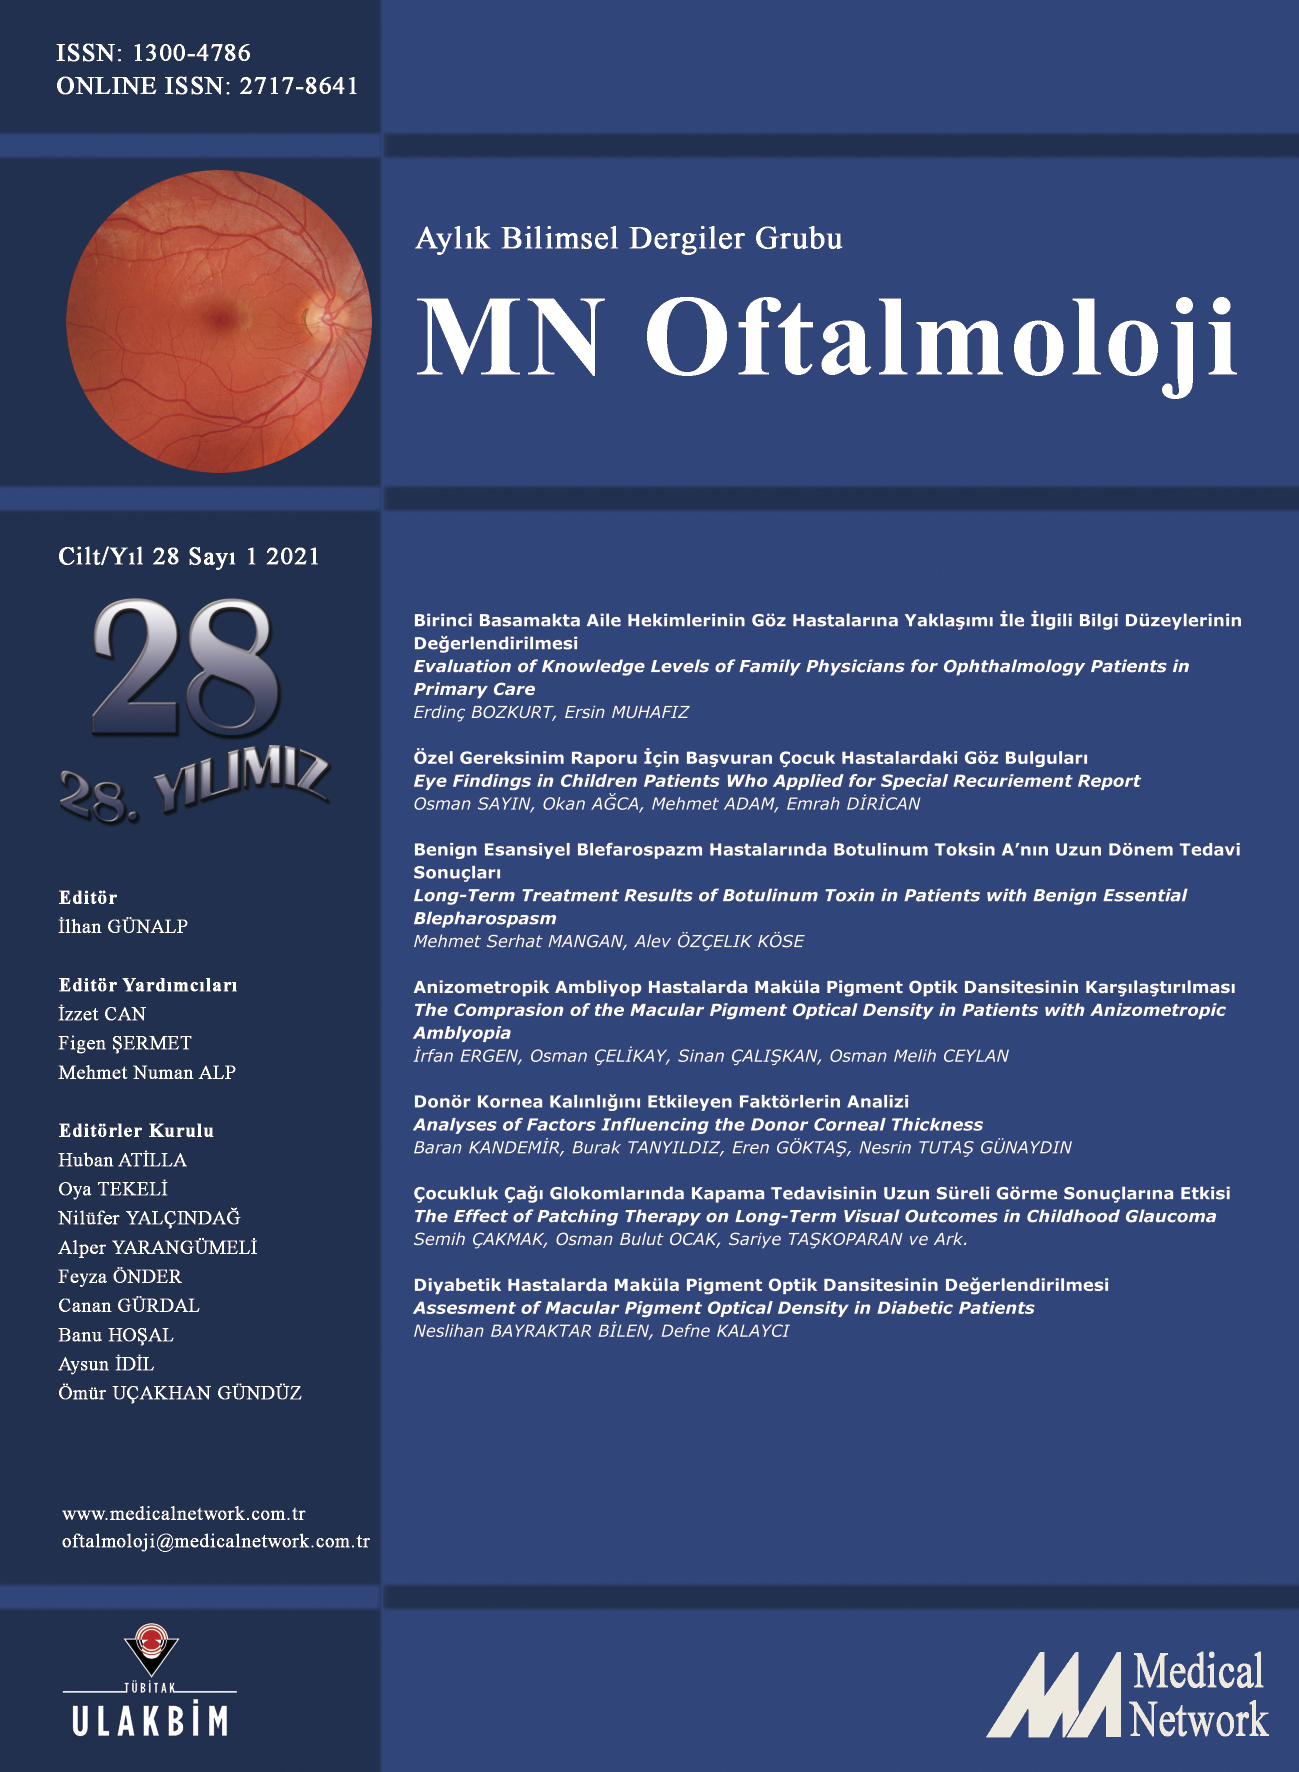 <p>MN Oftalmoloji Cilt: 28 Say: 1 2021 (MN Ophthalmology Volume: 28 No: 1 2021)</p>